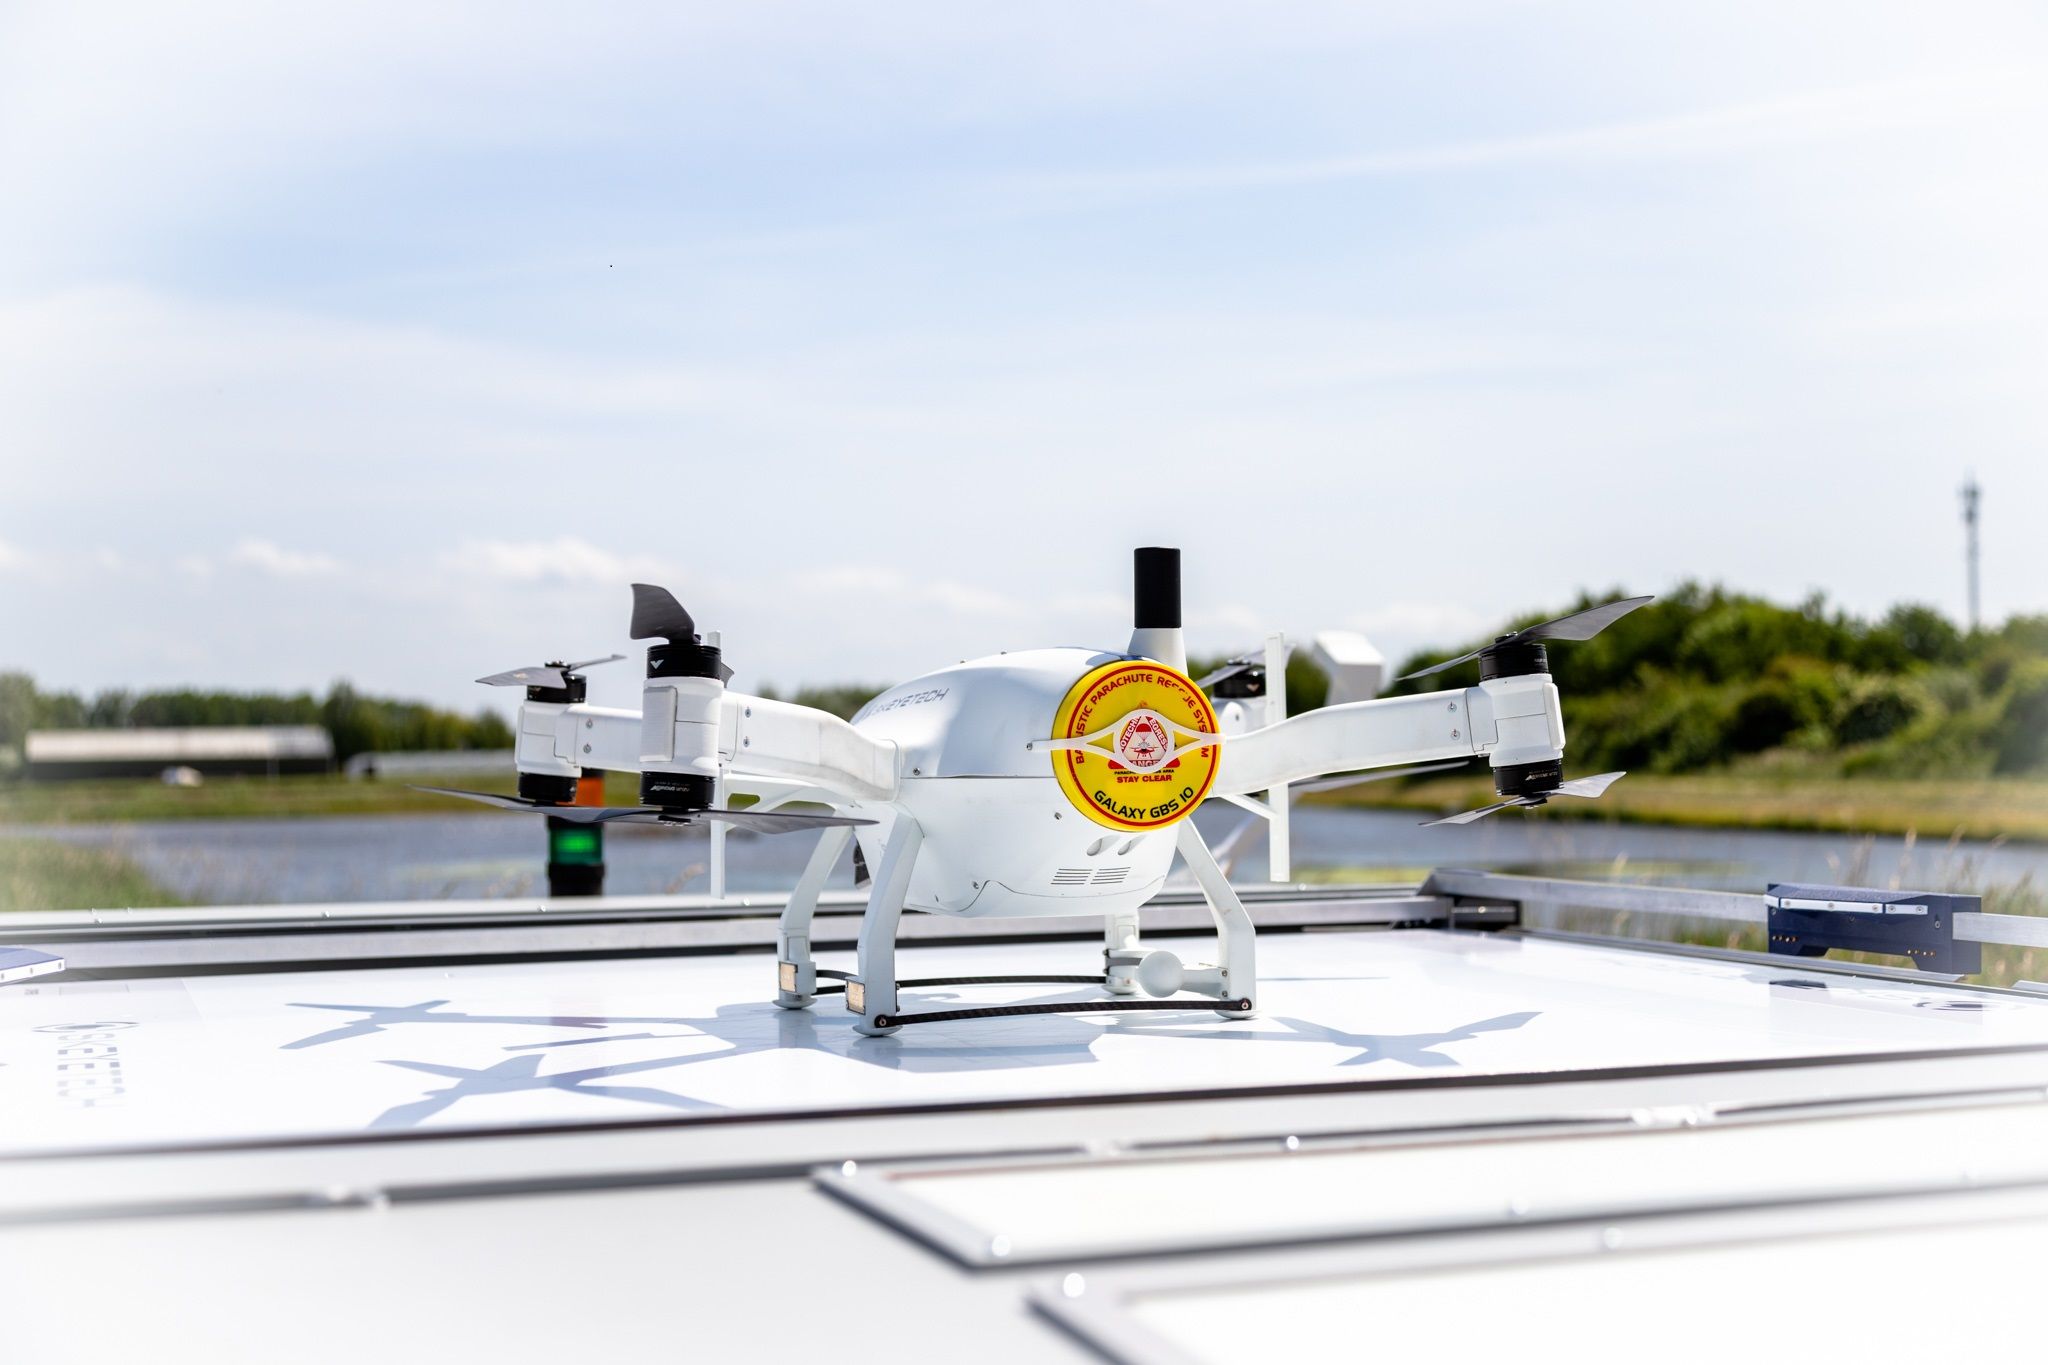 The Autonomous Flying Surveillance Camera by Bavak